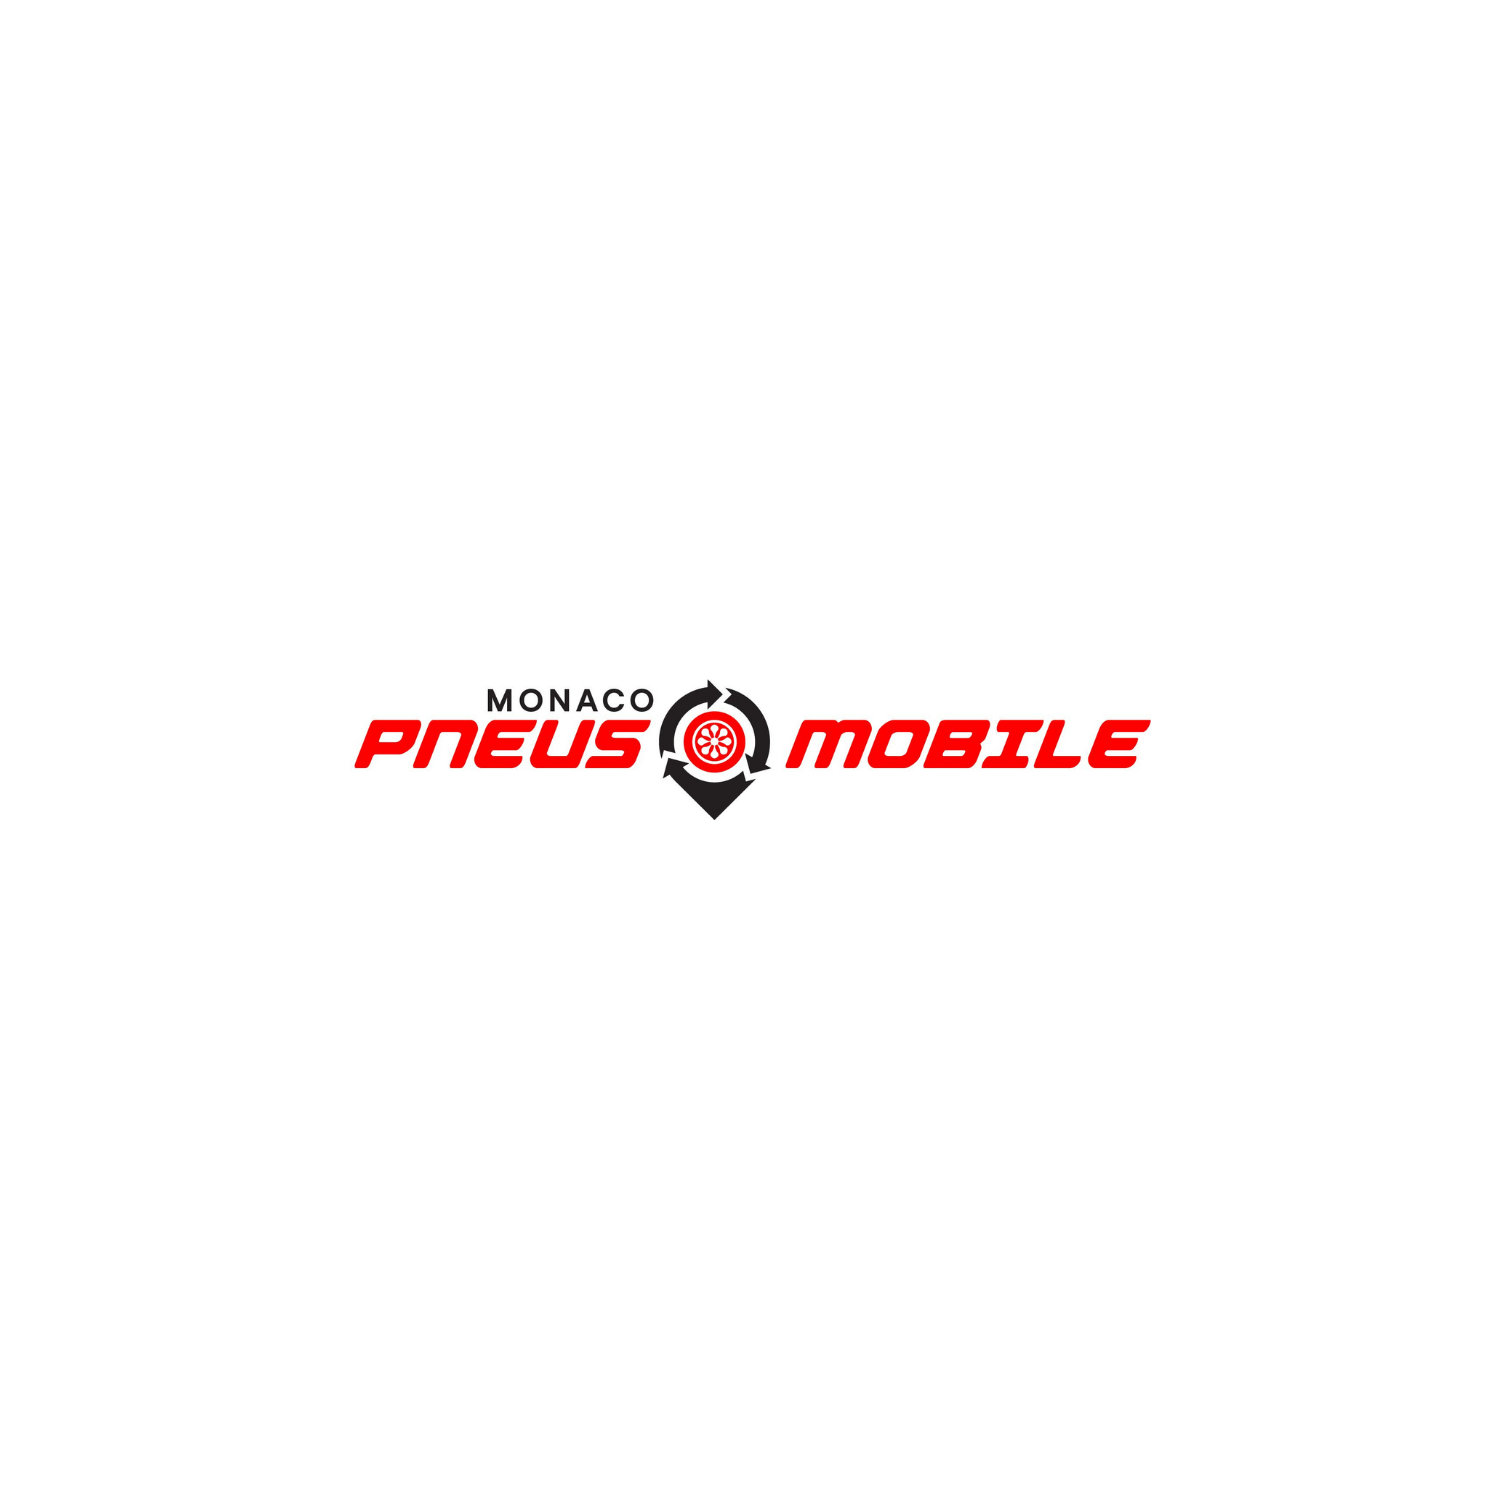 monaco-pneus-mobiles-merchant-carlo-app-servicio